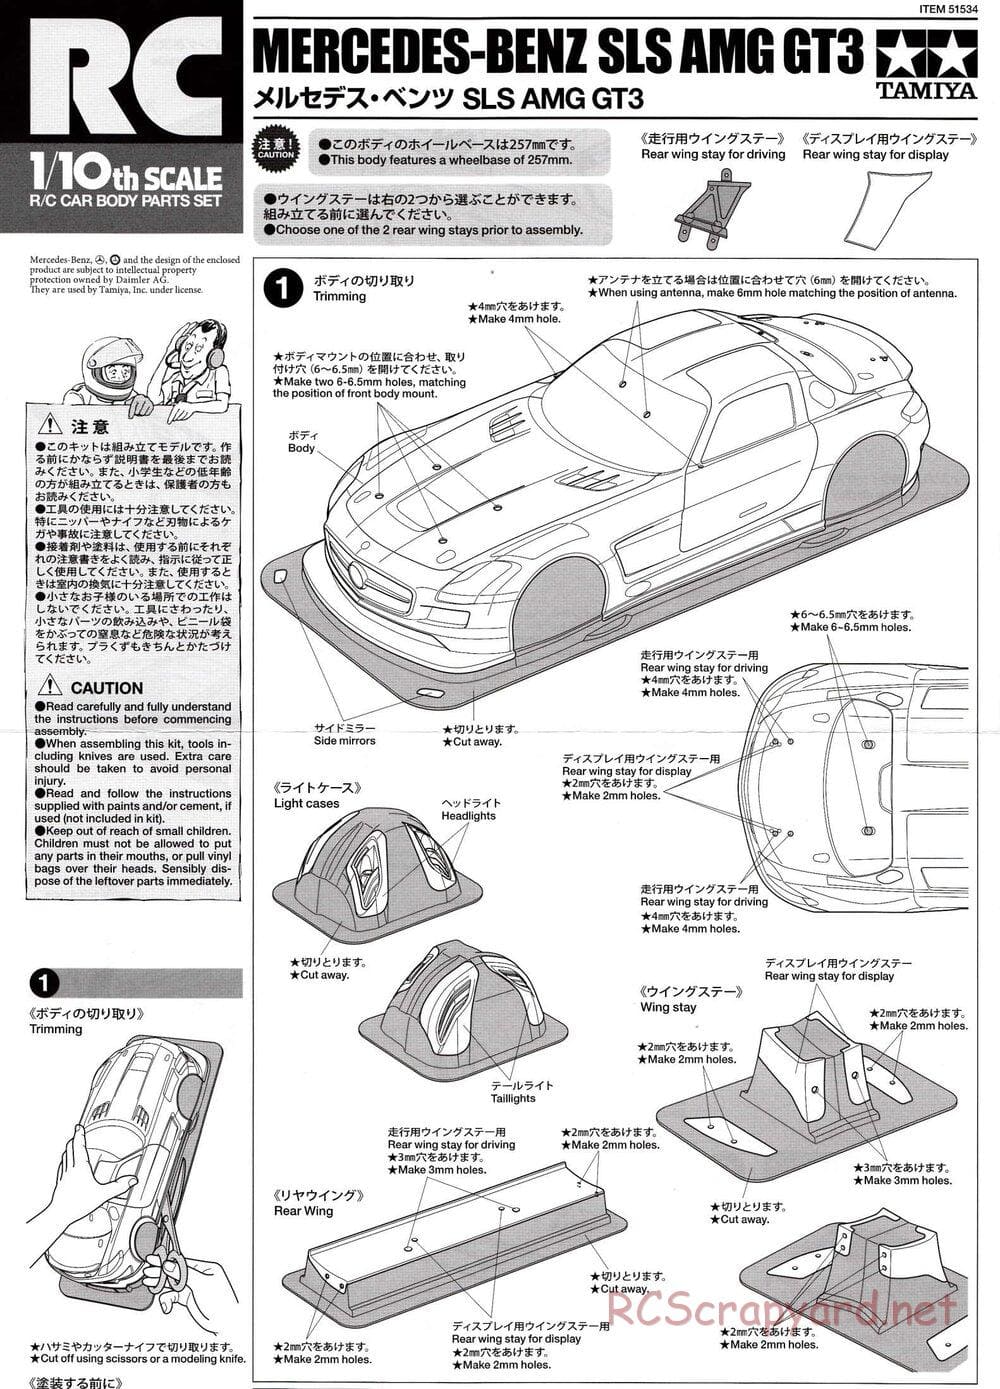 Tamiya - Mercedes Benz SLS AMG GT3 - TT-02 Chassis - Body Manual - Page 1